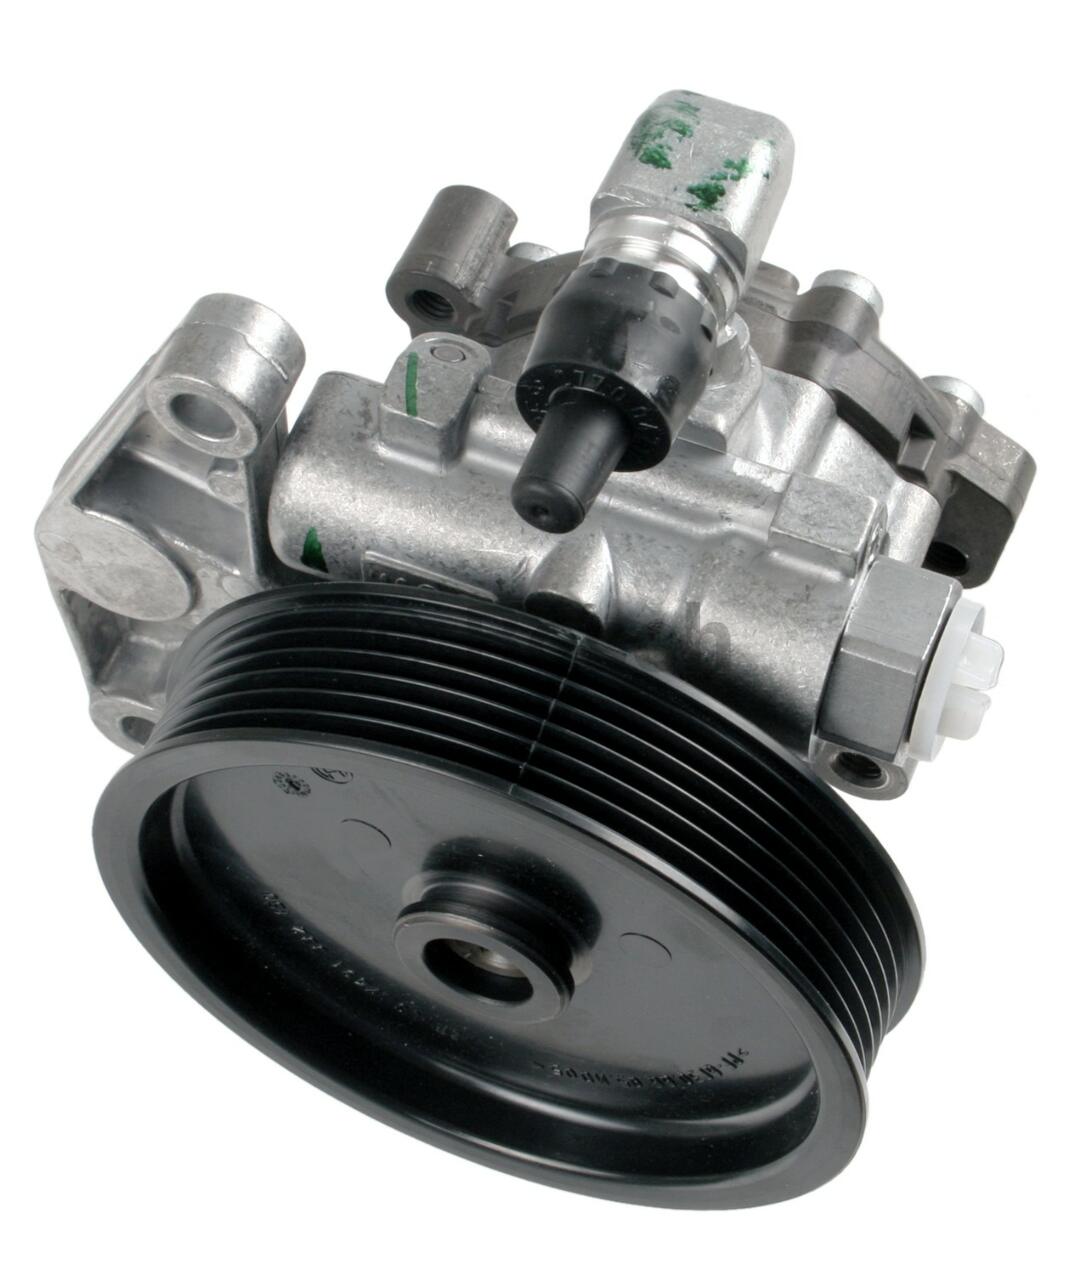 Mercedes Power Steering Pump (Rebuilt) 005466650170 - Bosch KS01000698